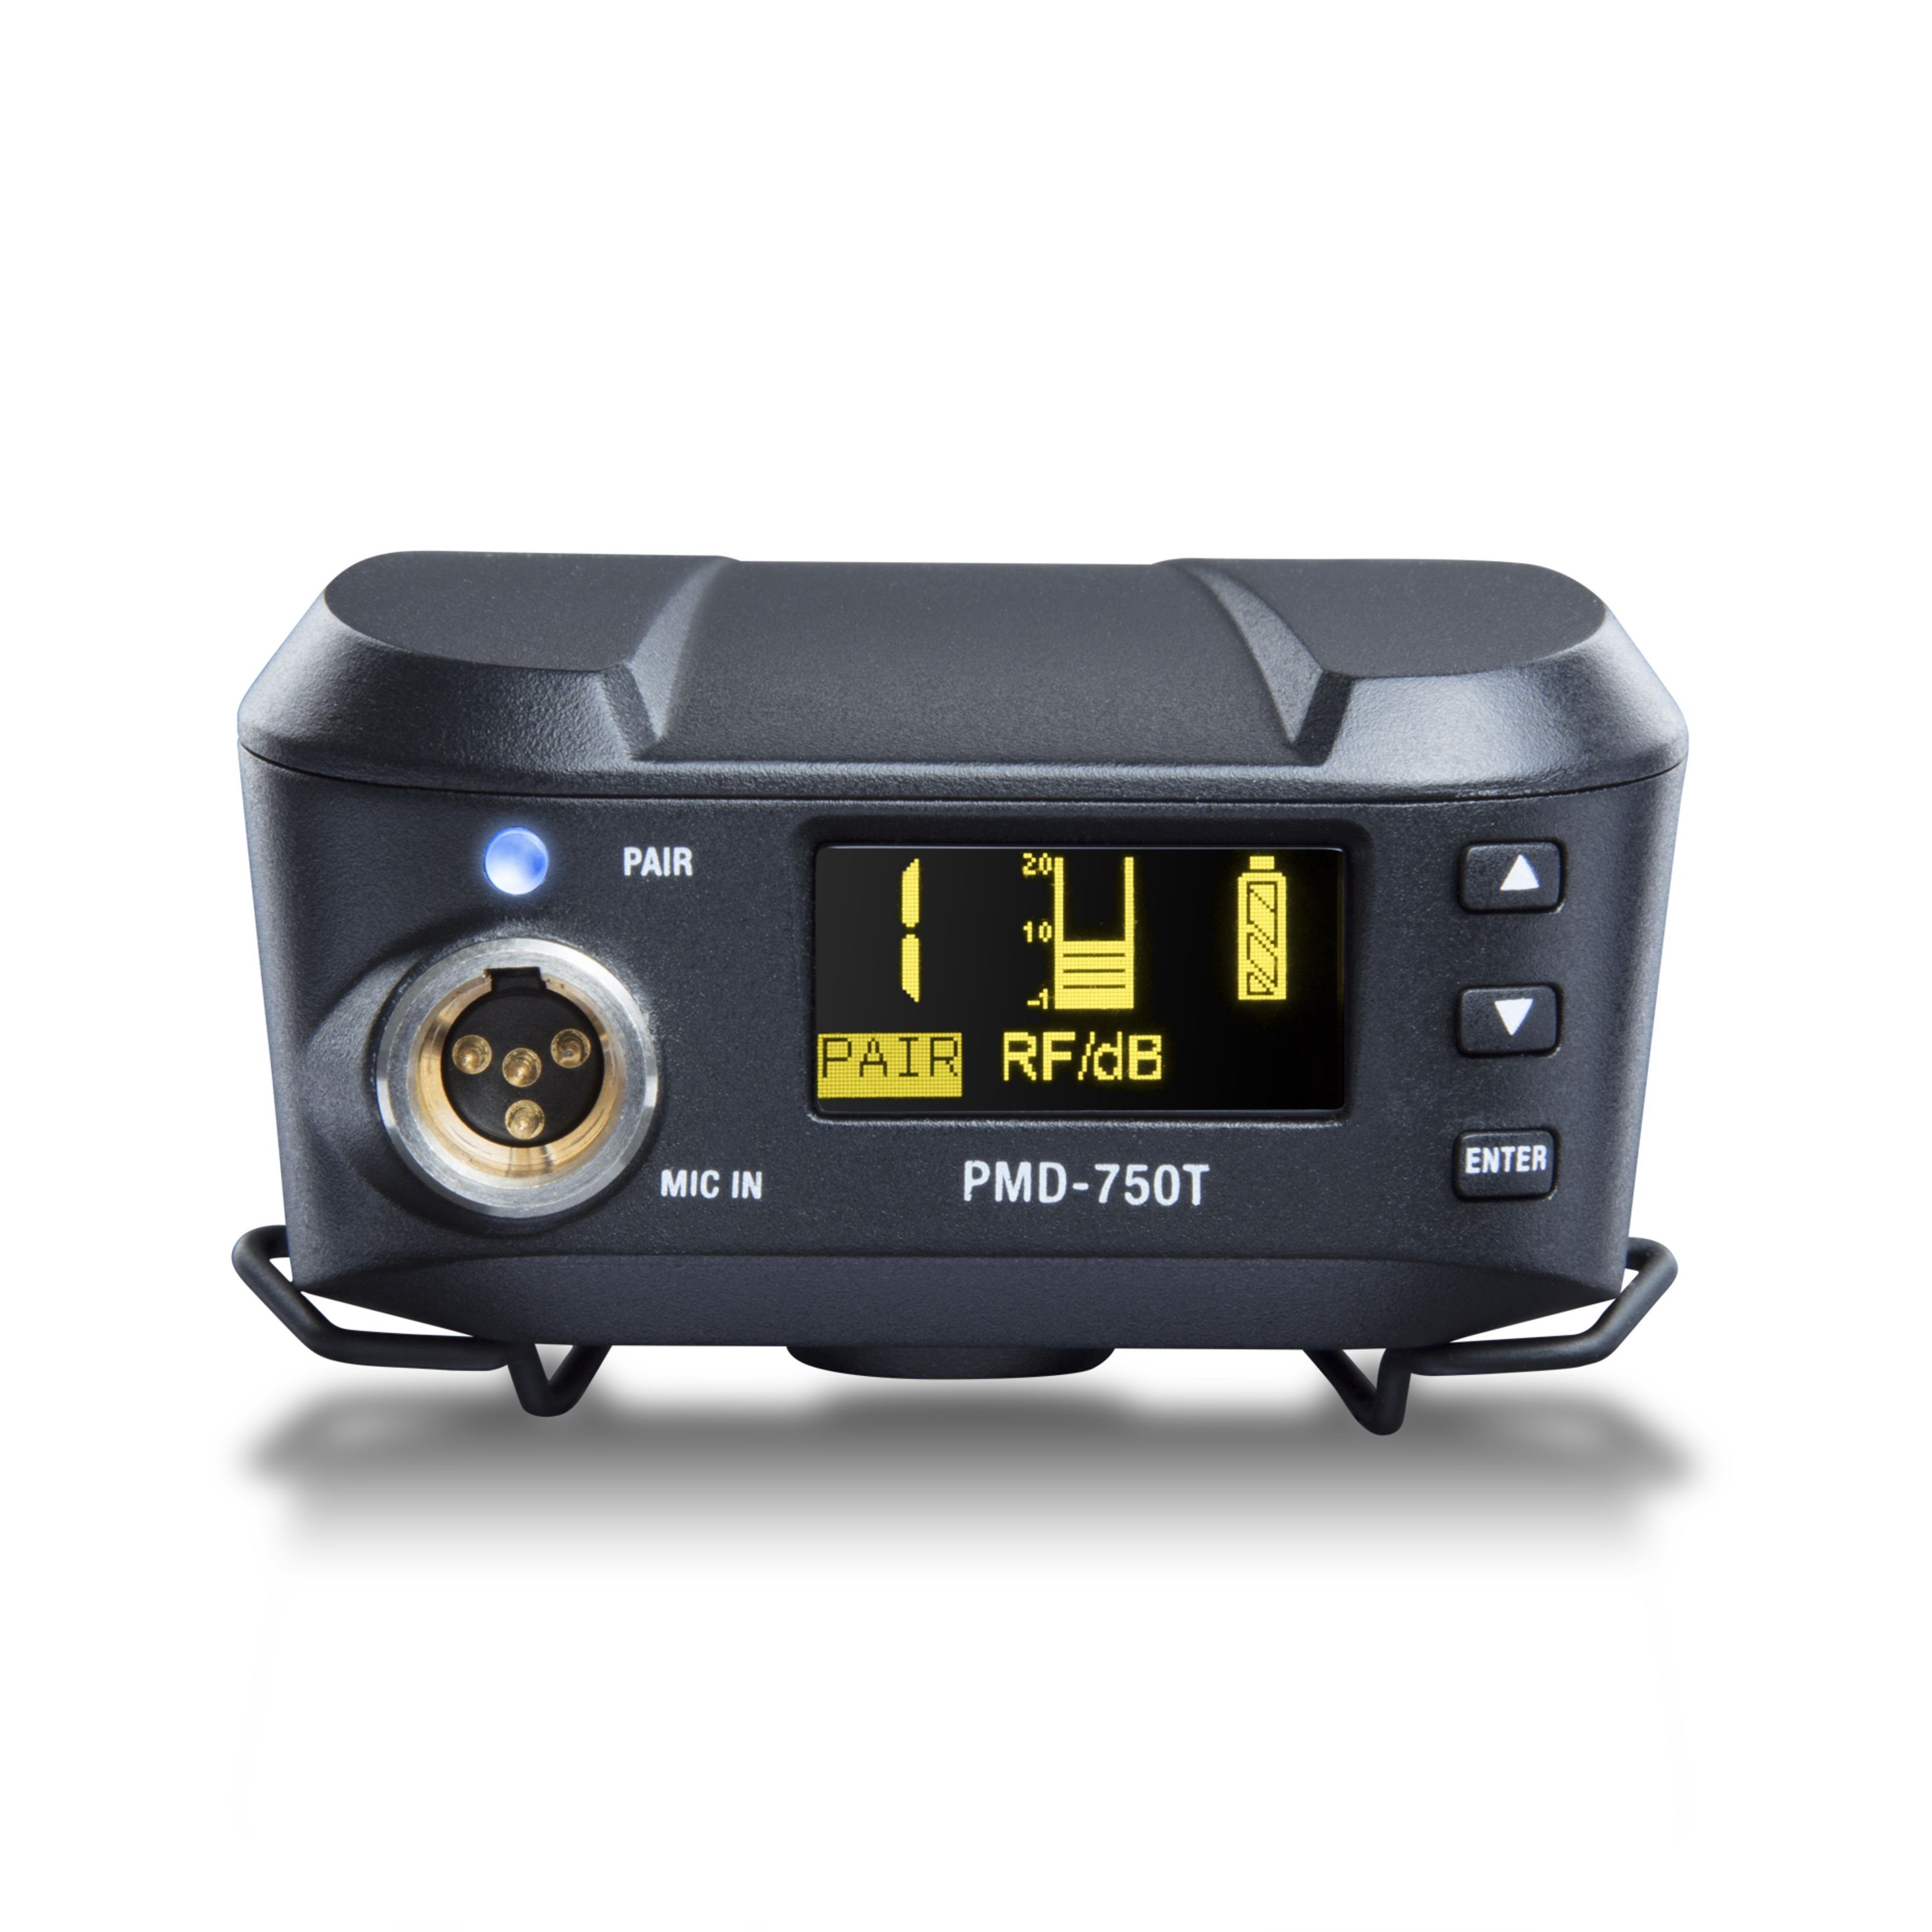 Marantz Mikrofon (PMD-750T Gürtelsender f. PMD-750 System), PMD-750T Gürtelsender f. PMD-750 System - Einzelkomponente für